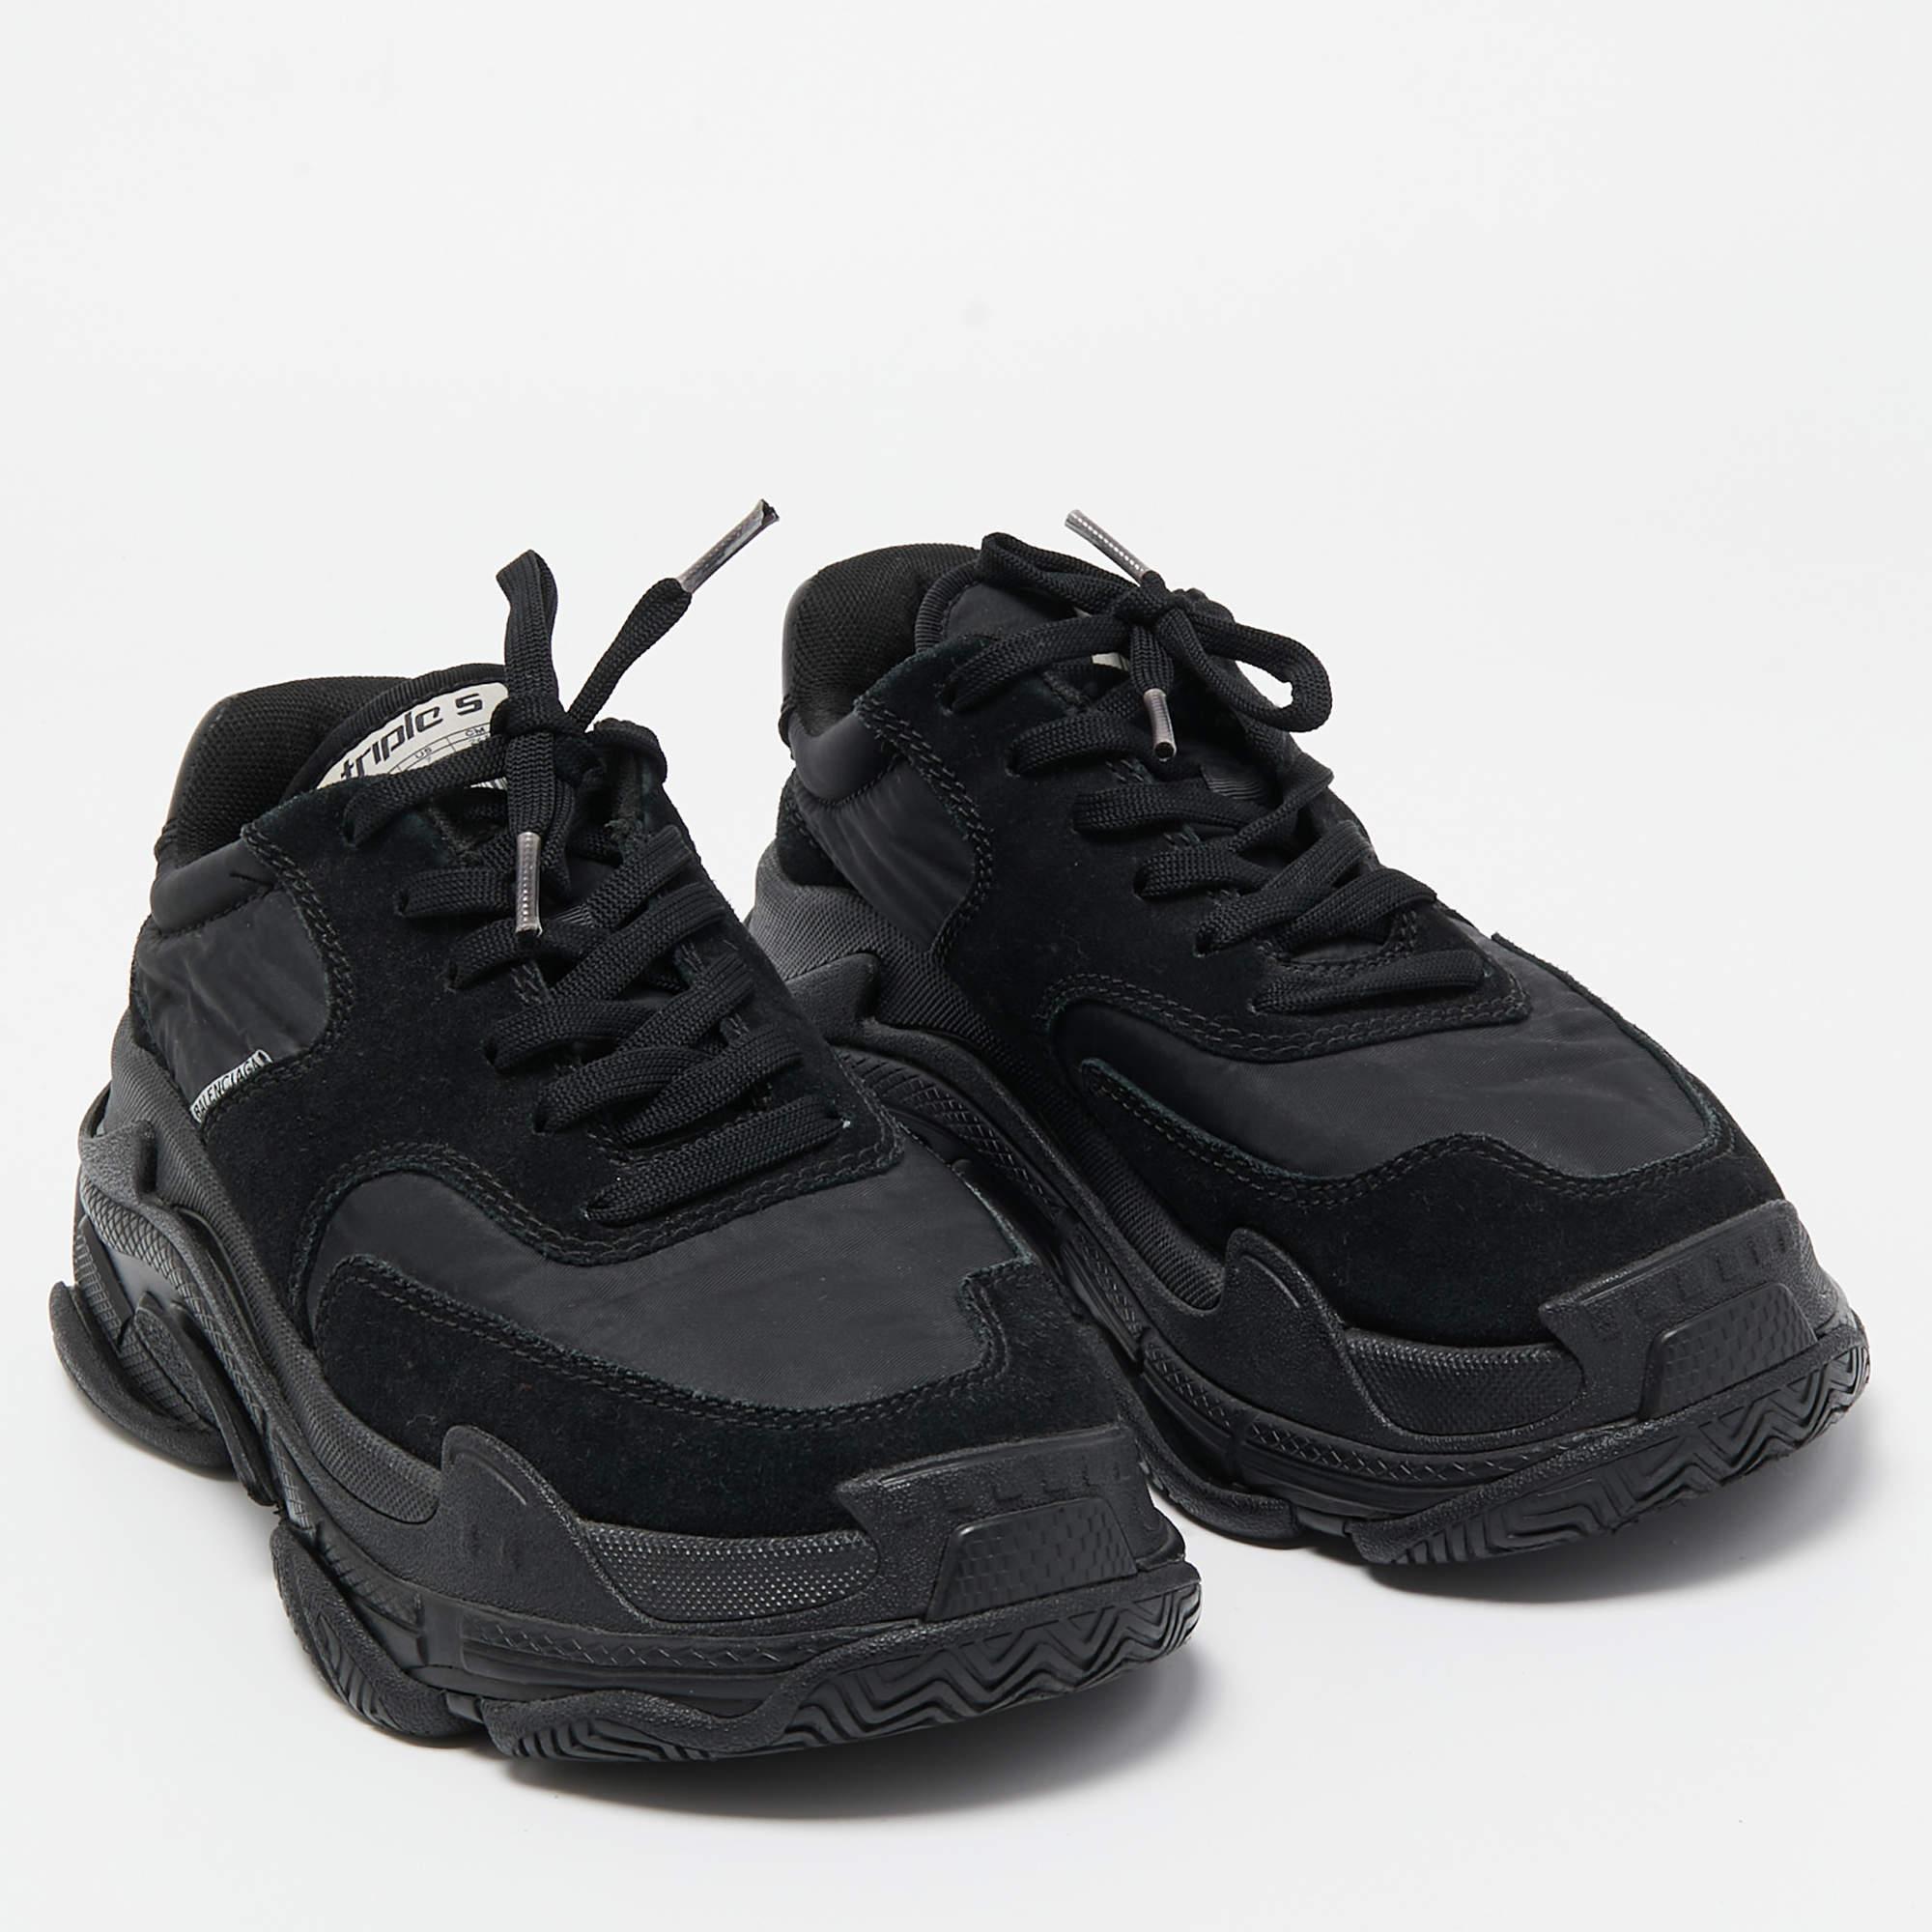 Balenciaga Black Nylon and Suede Triple S Sneakers Size 37 1